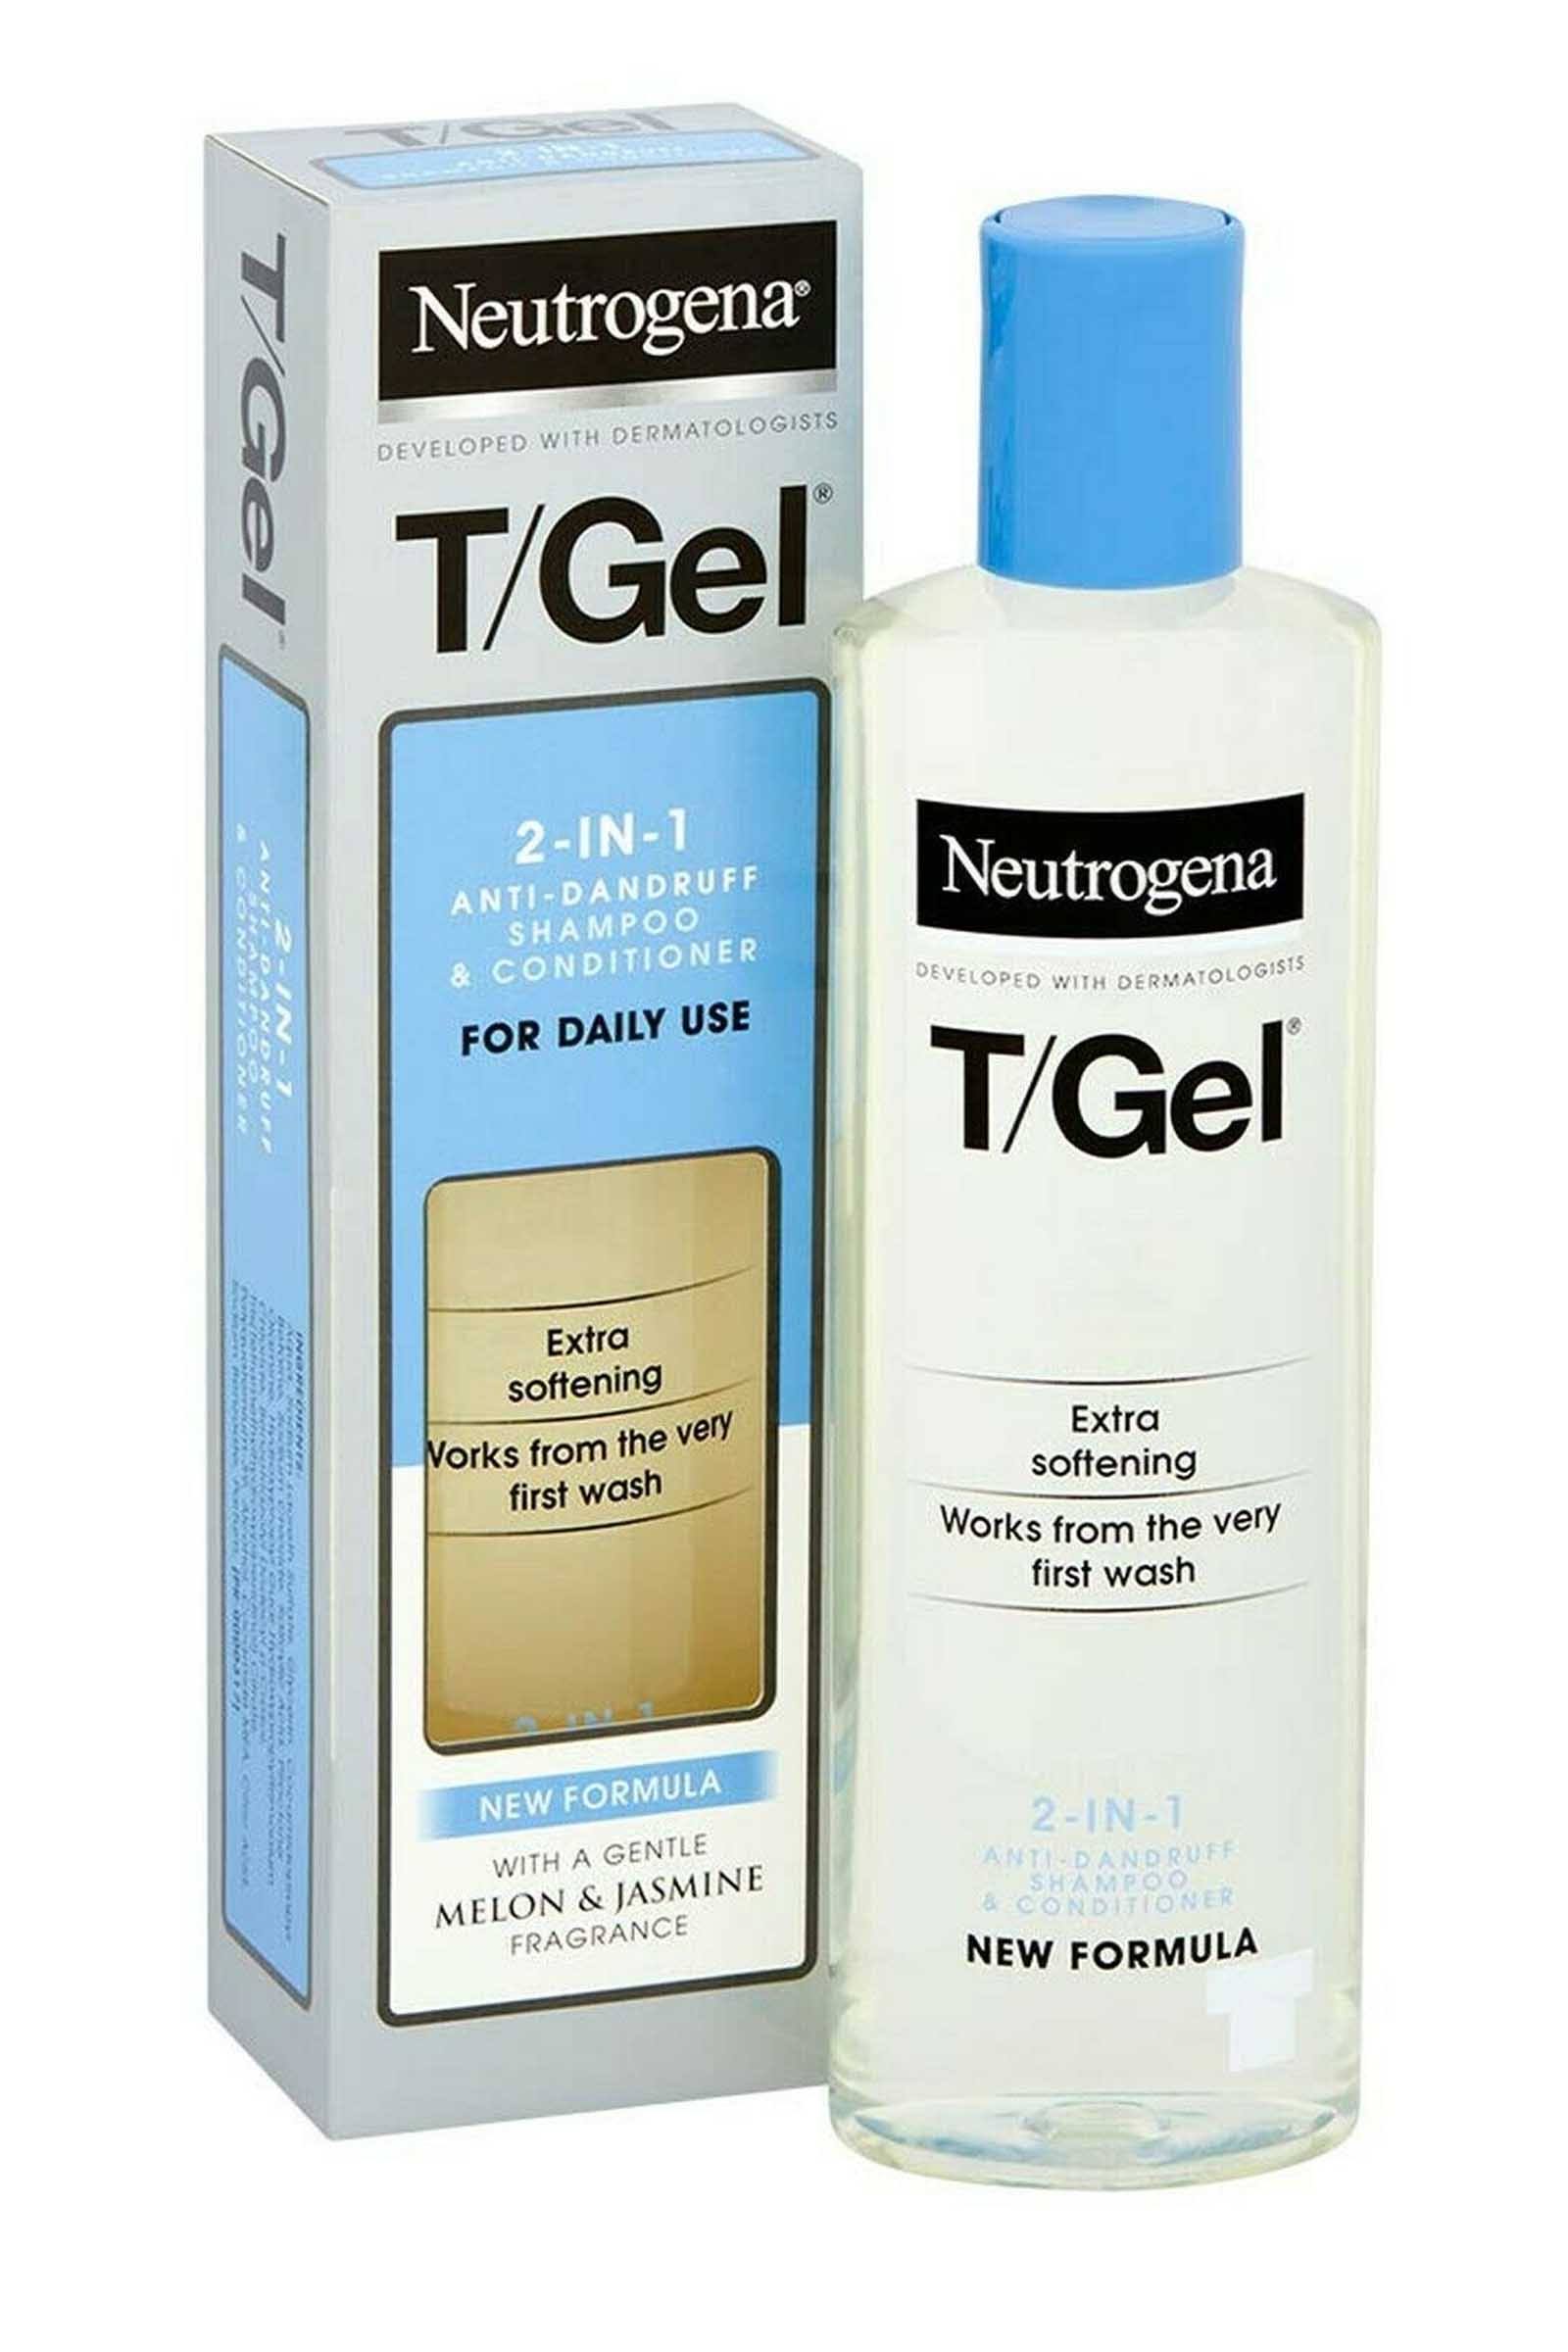 Neutrogena T/Gel 2 in 1 Anti Dandruff Shampoo and Conditioner - 250ml